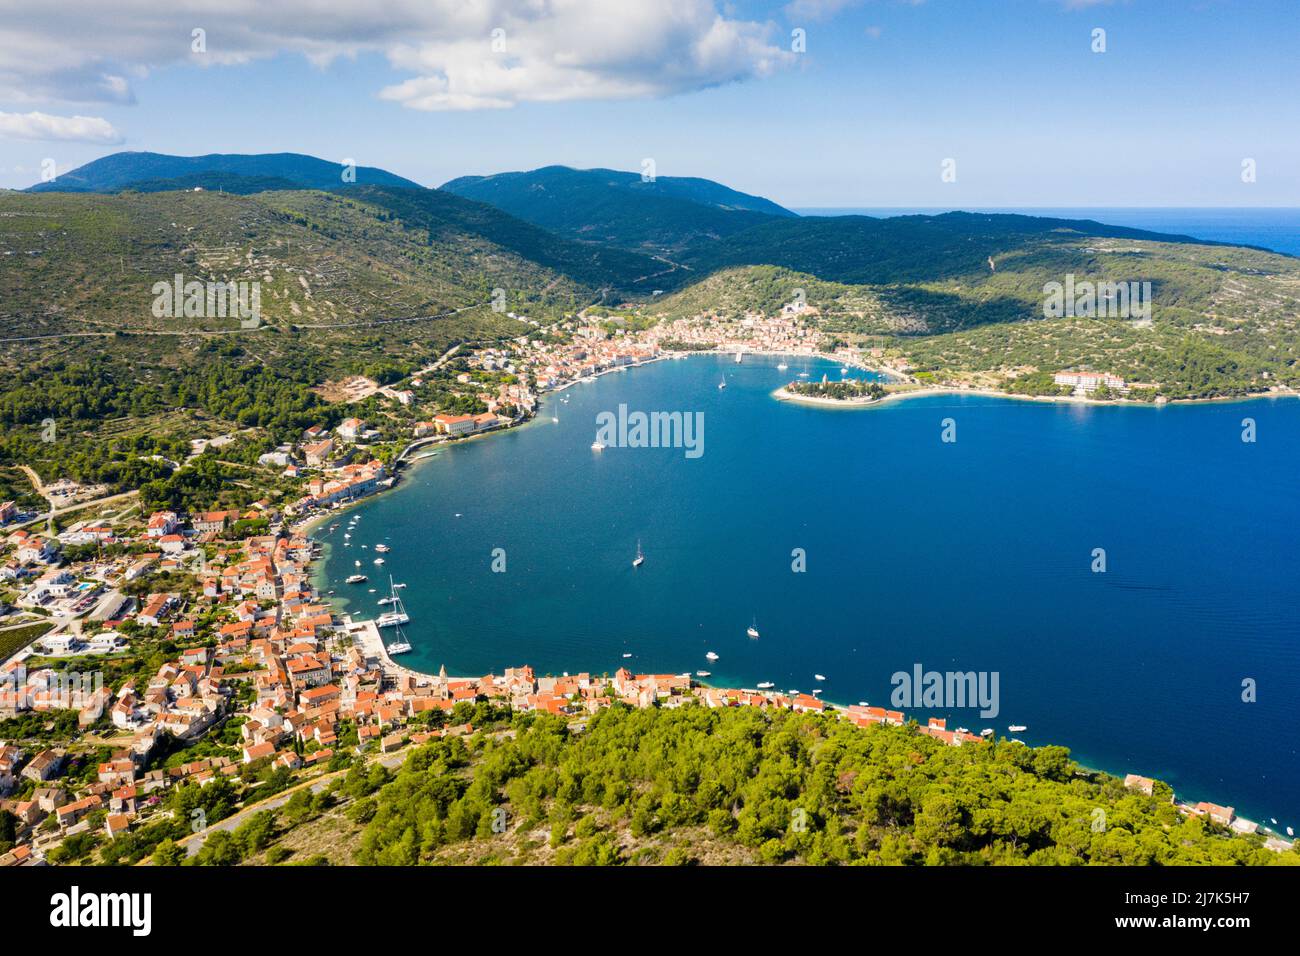 Town and bay of Vis, Vis Island, Mediterranean Sea, Croatia Stock Photo